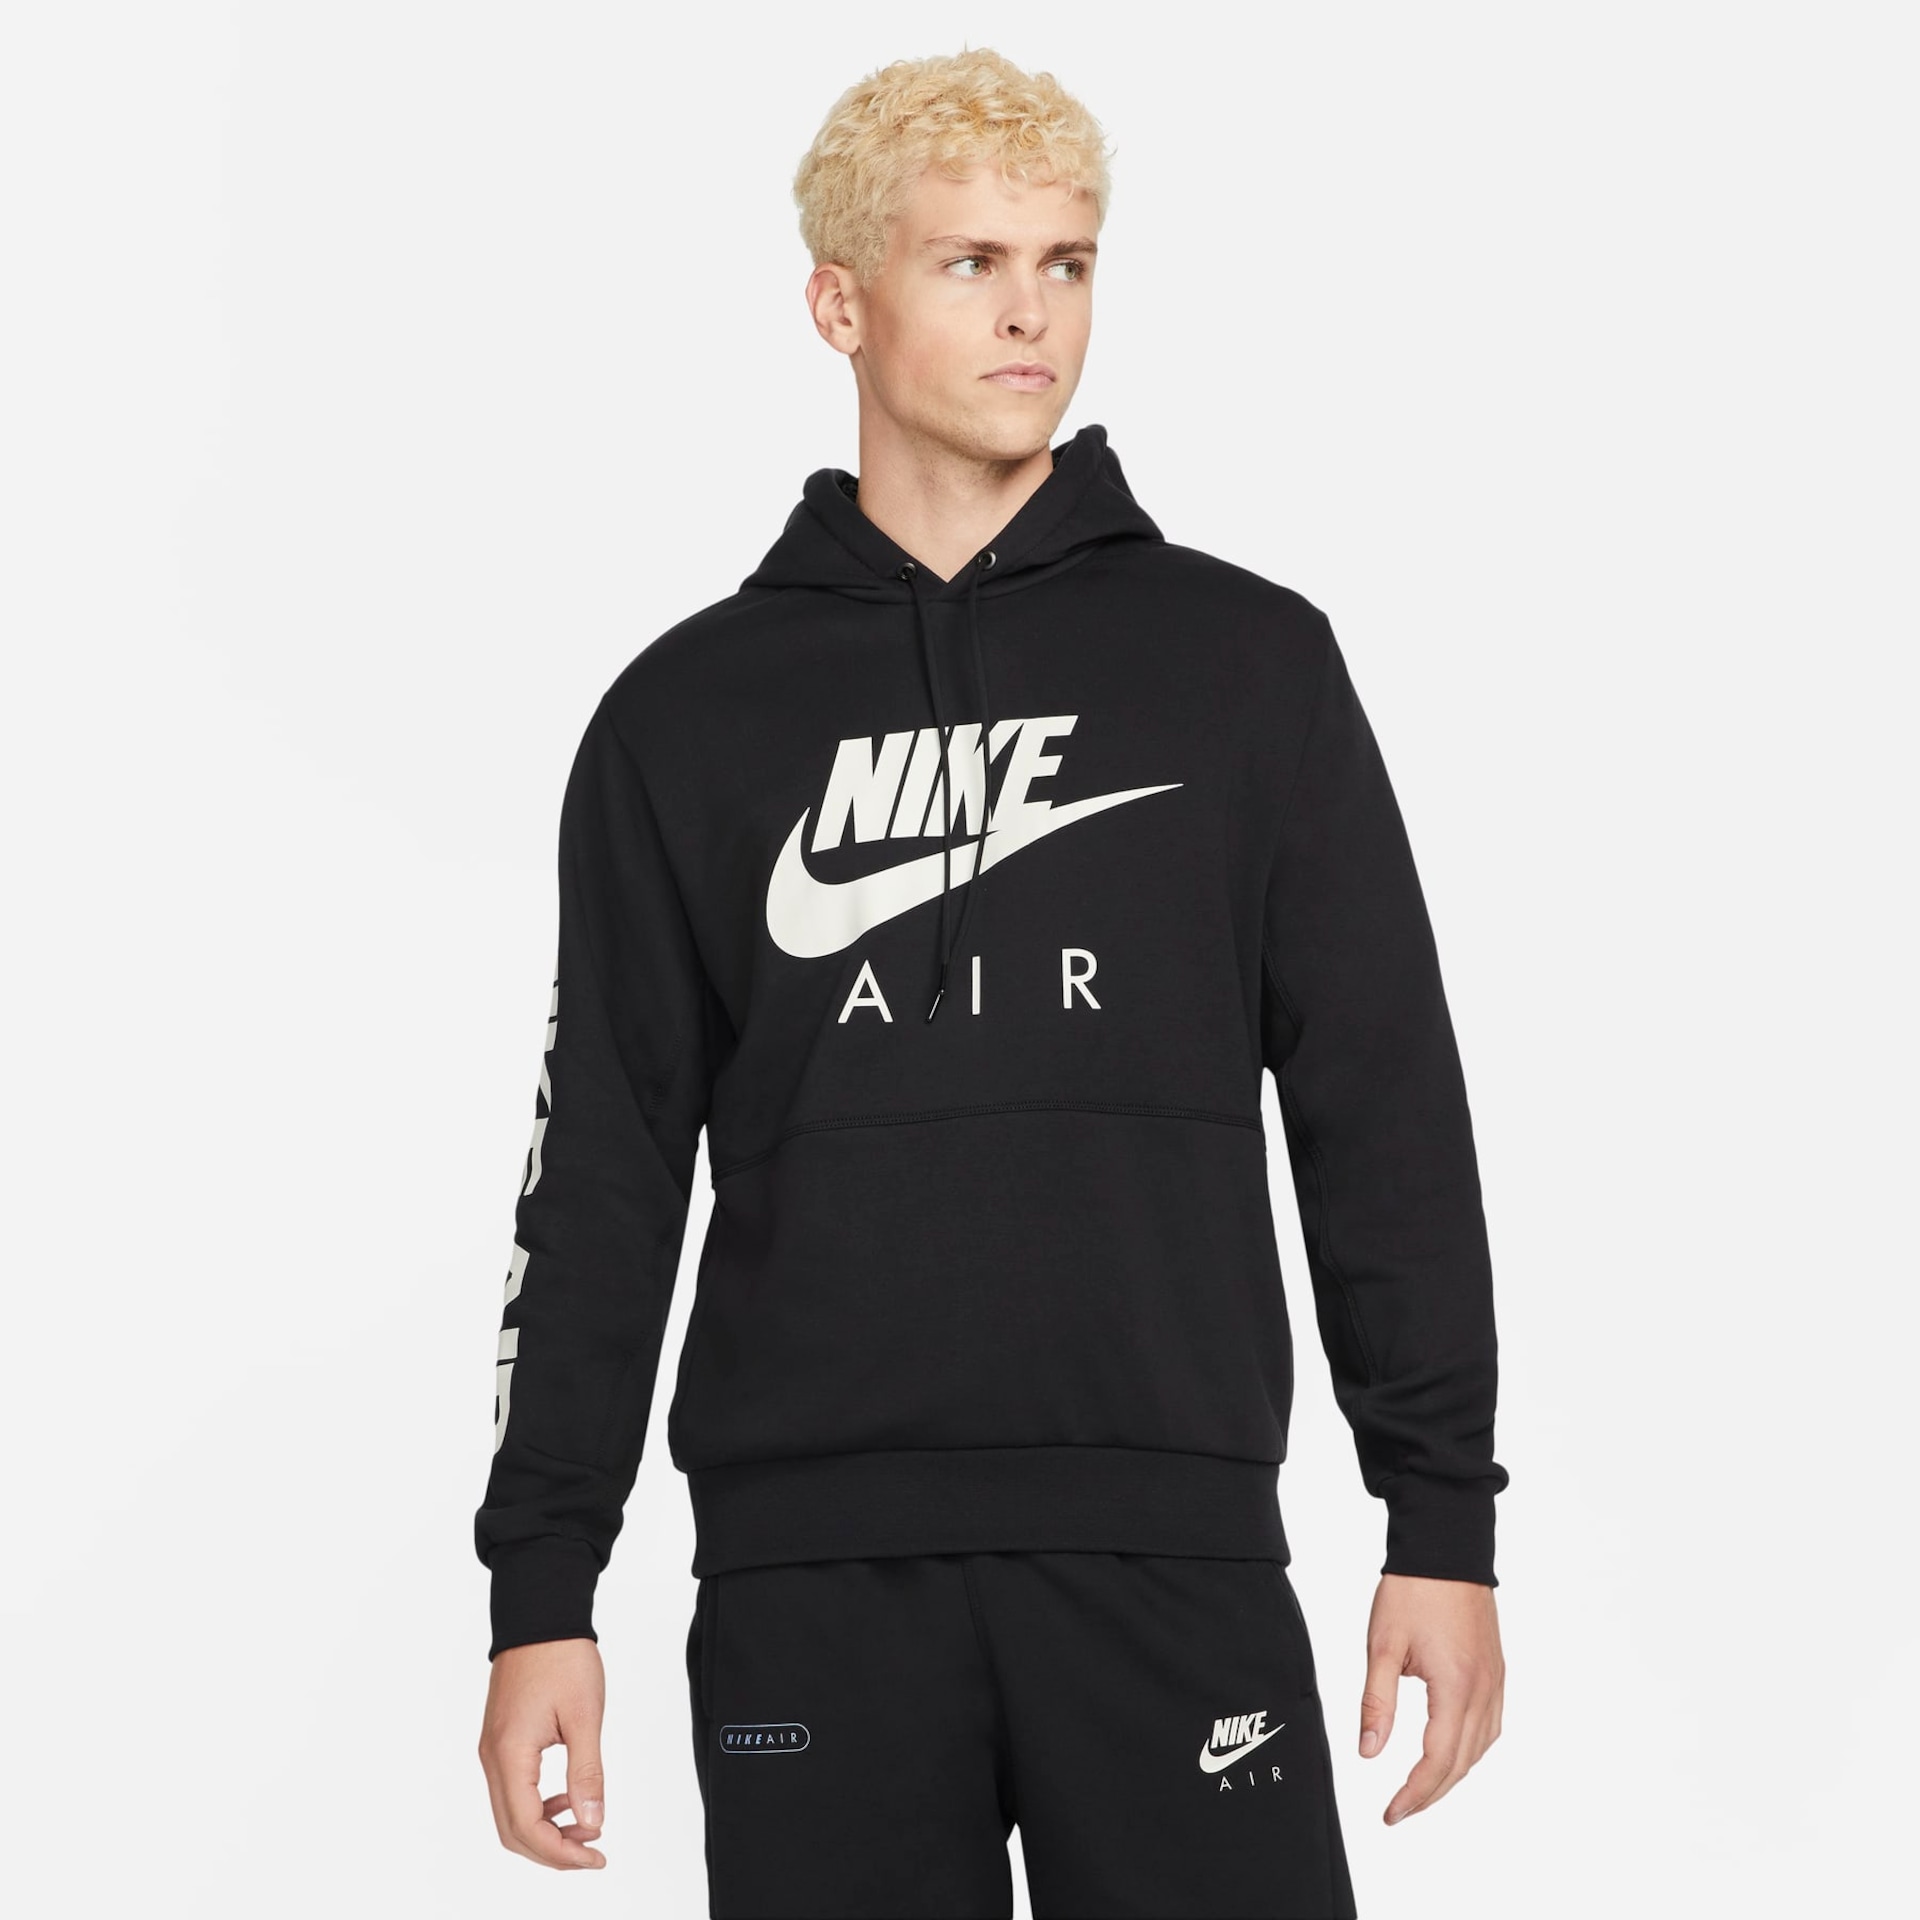 Oferta de Blusão Nike Air Masculino - - Just Do It